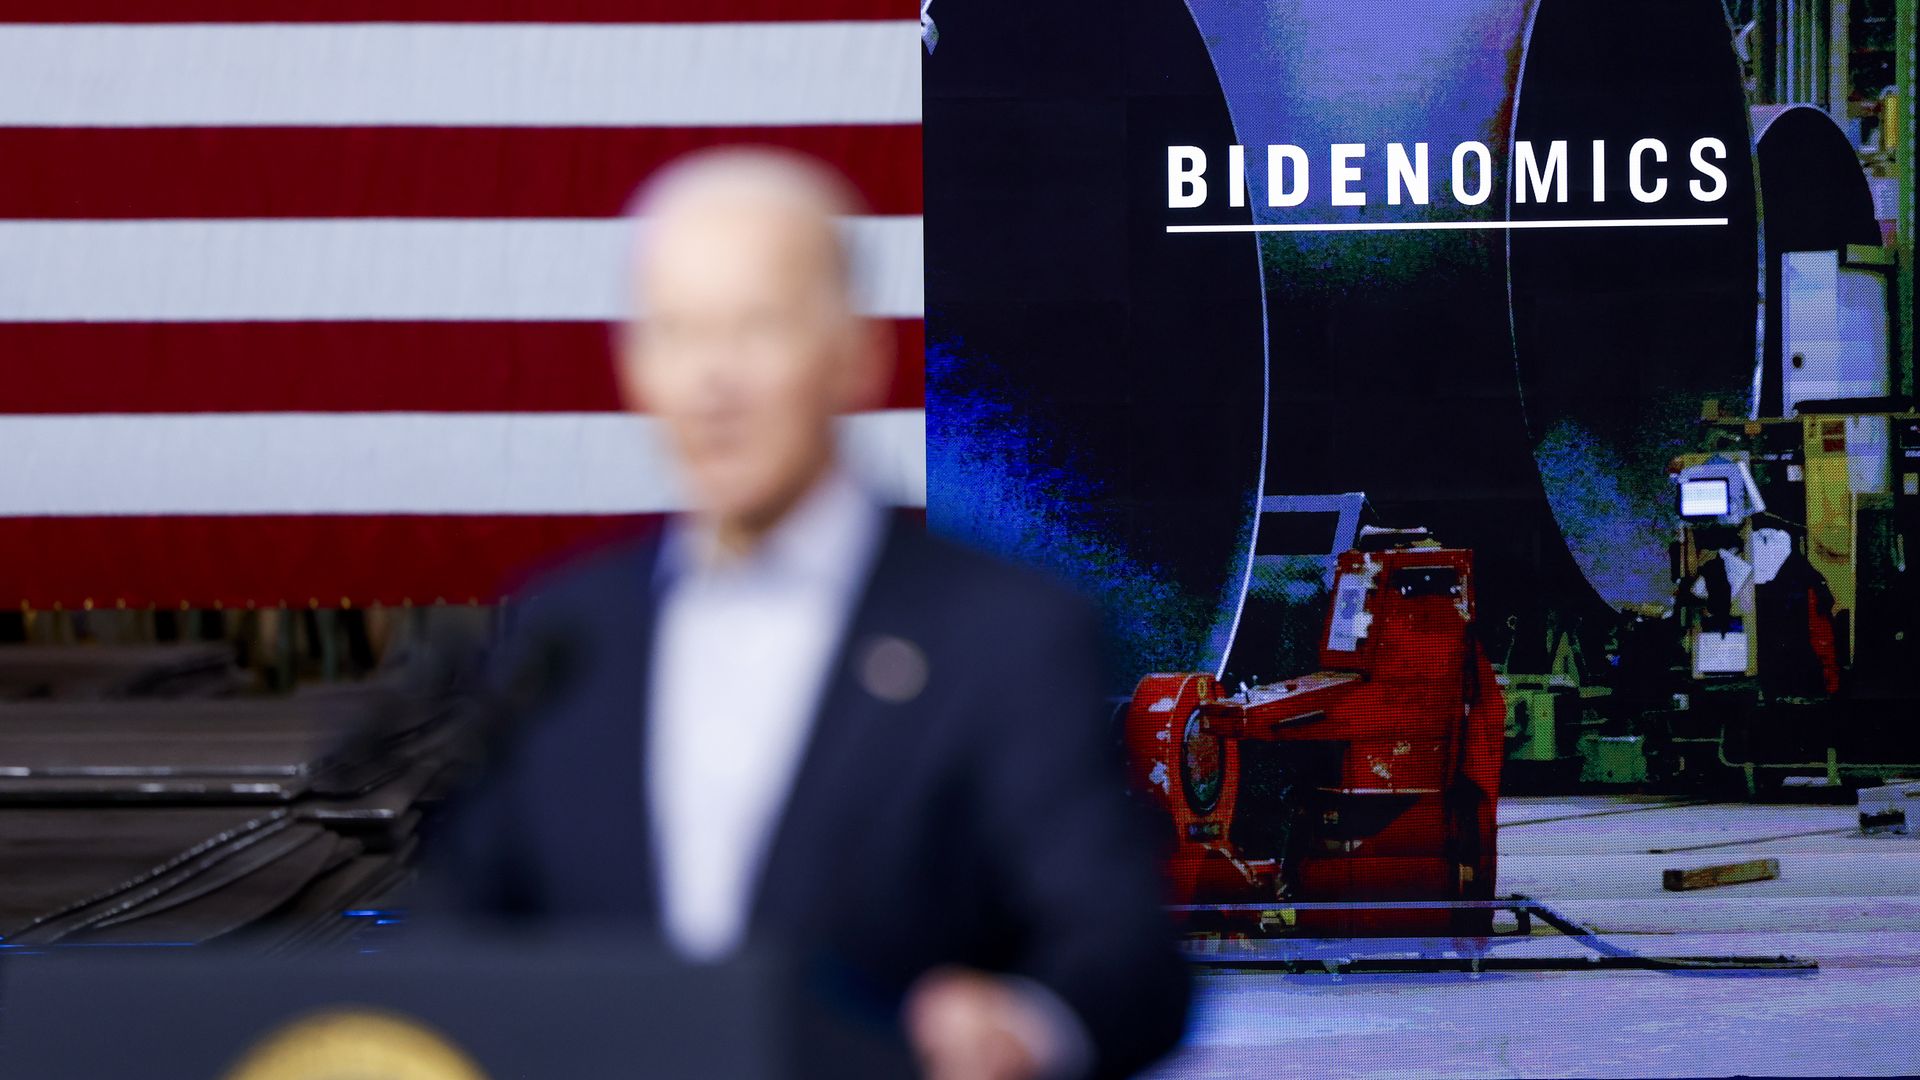 US President Joe Biden speaks about Bidenomics at CS Wind, the largest wind turbine tower manufacturer in the world